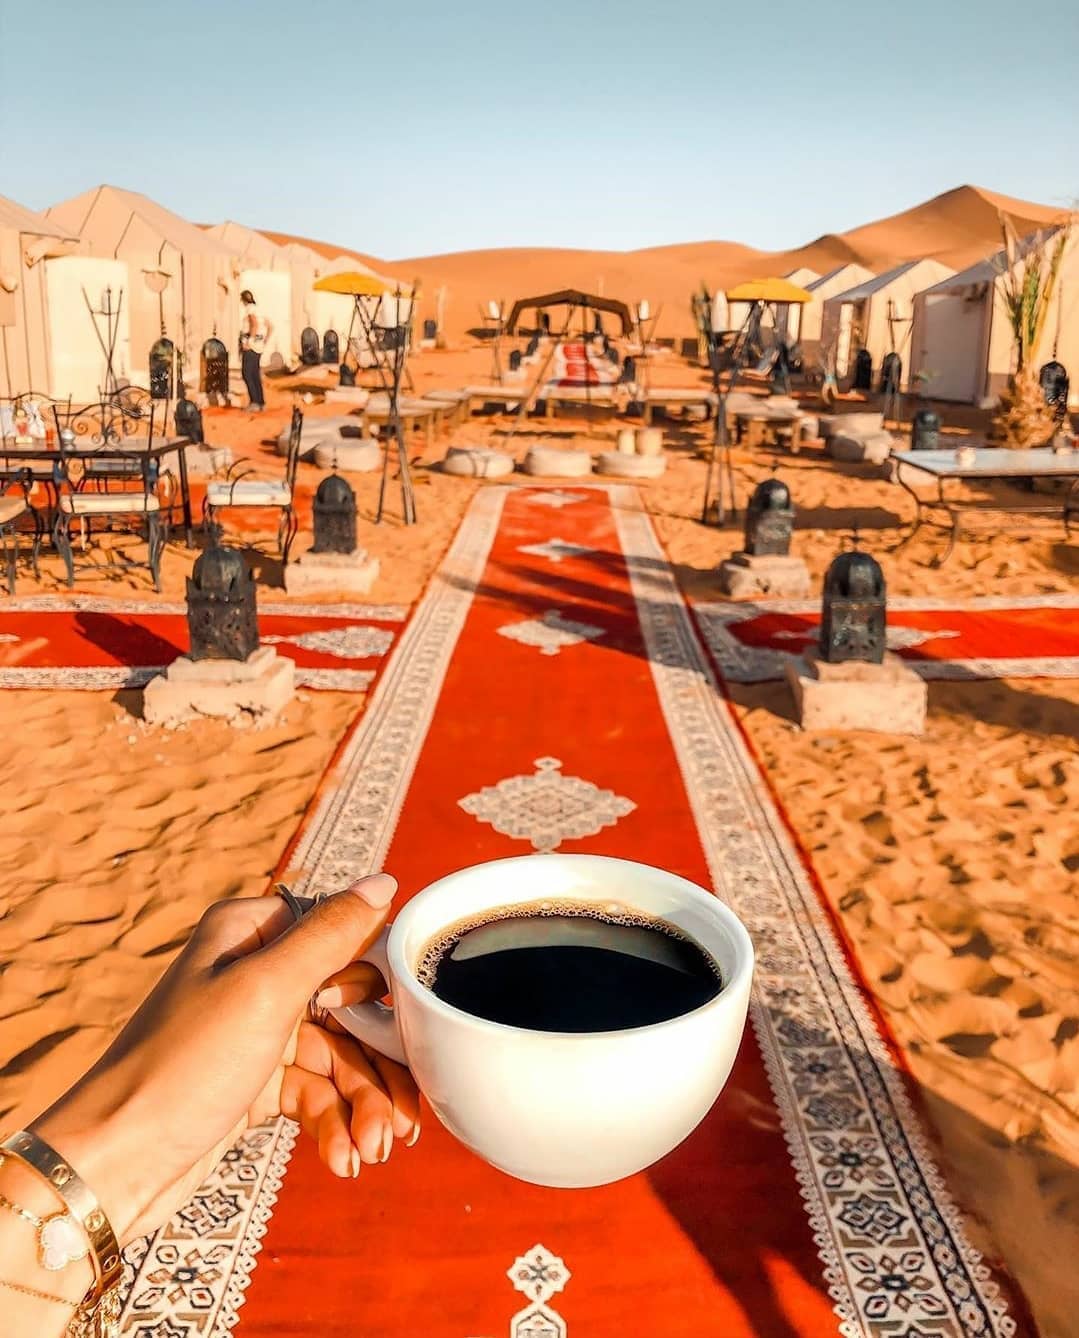 desert experience, Morocco 2022/2023